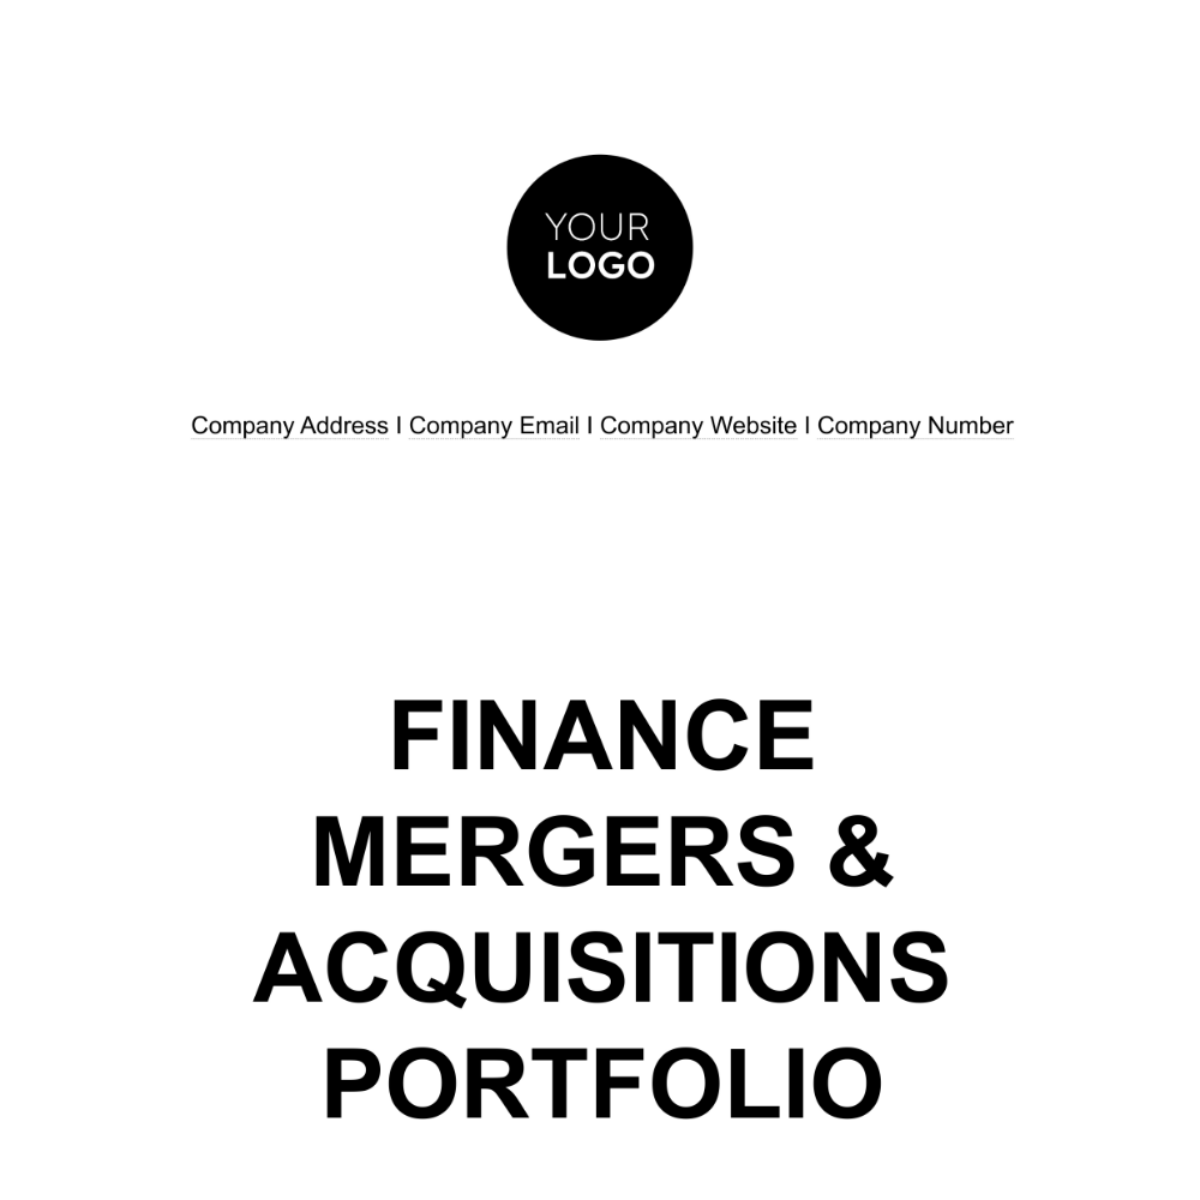 Free Finance Mergers & Acquisitions Portfolio Template